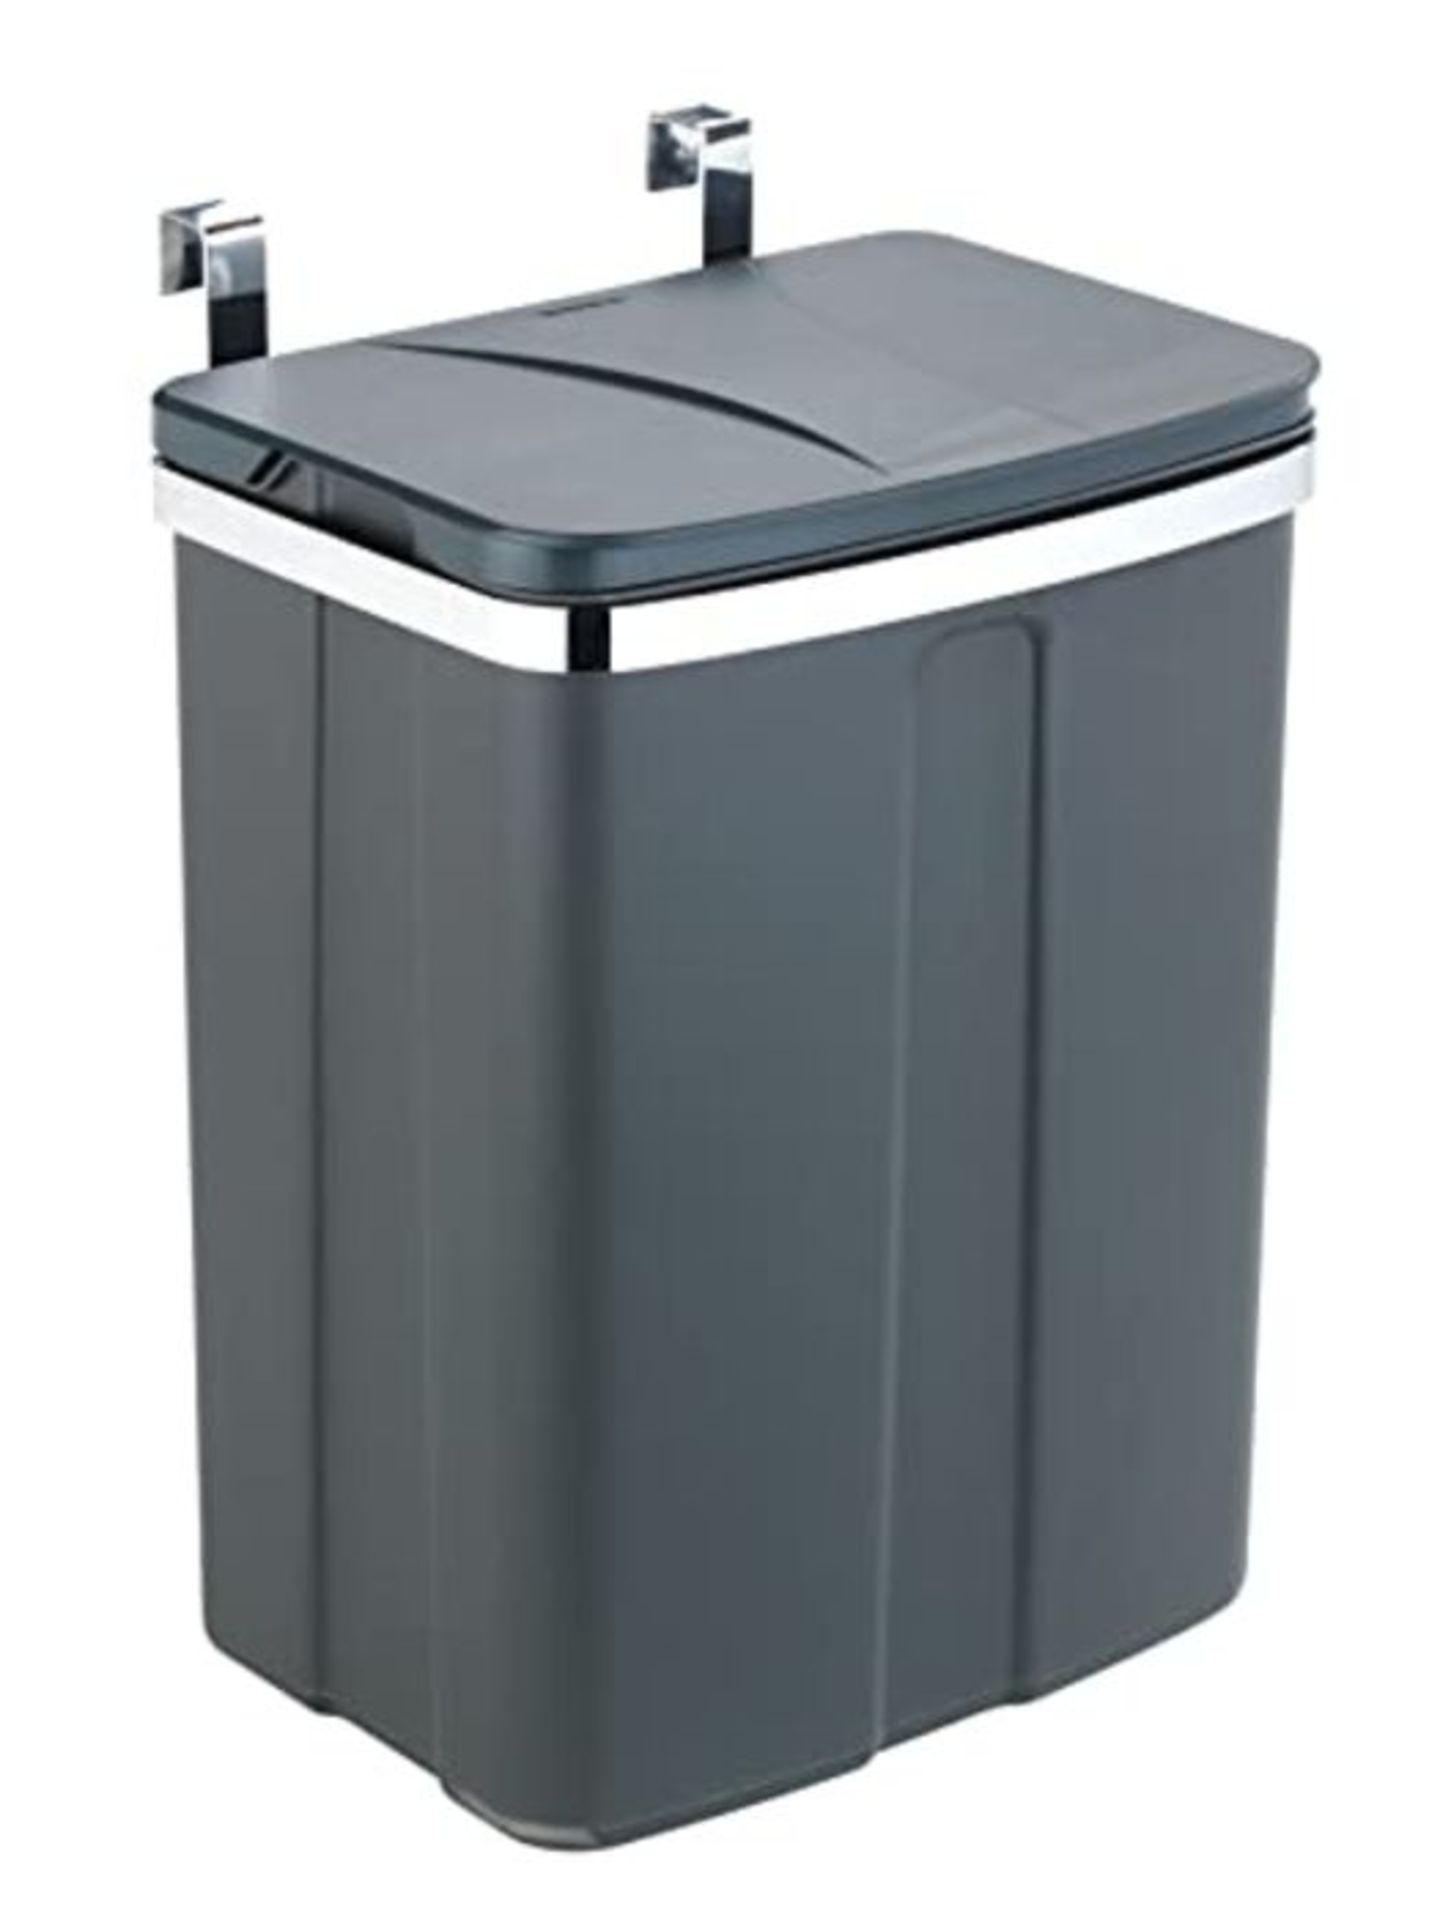 Wenko door waste bin - cupboard waste bin, kitchen waste bin capacity: 12l, 26 x 34 x